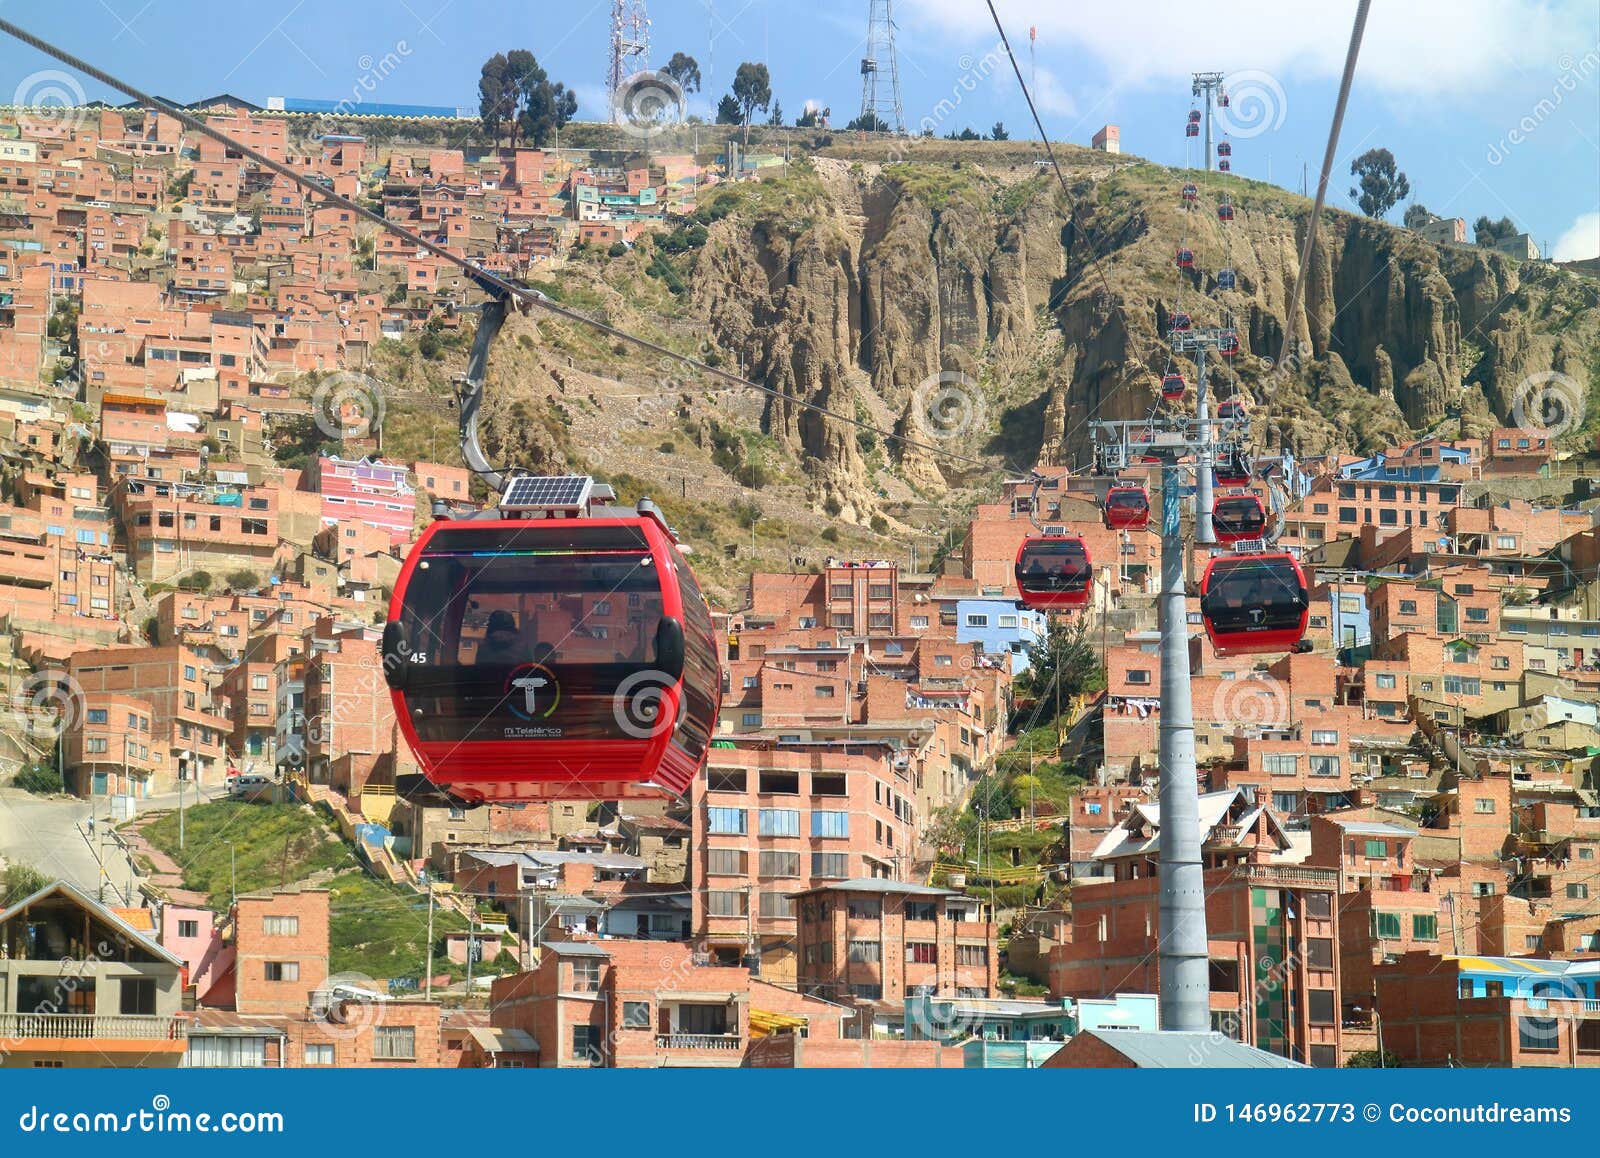 red line of mi teleferico cable car connecting la paz and el alto, bolivia